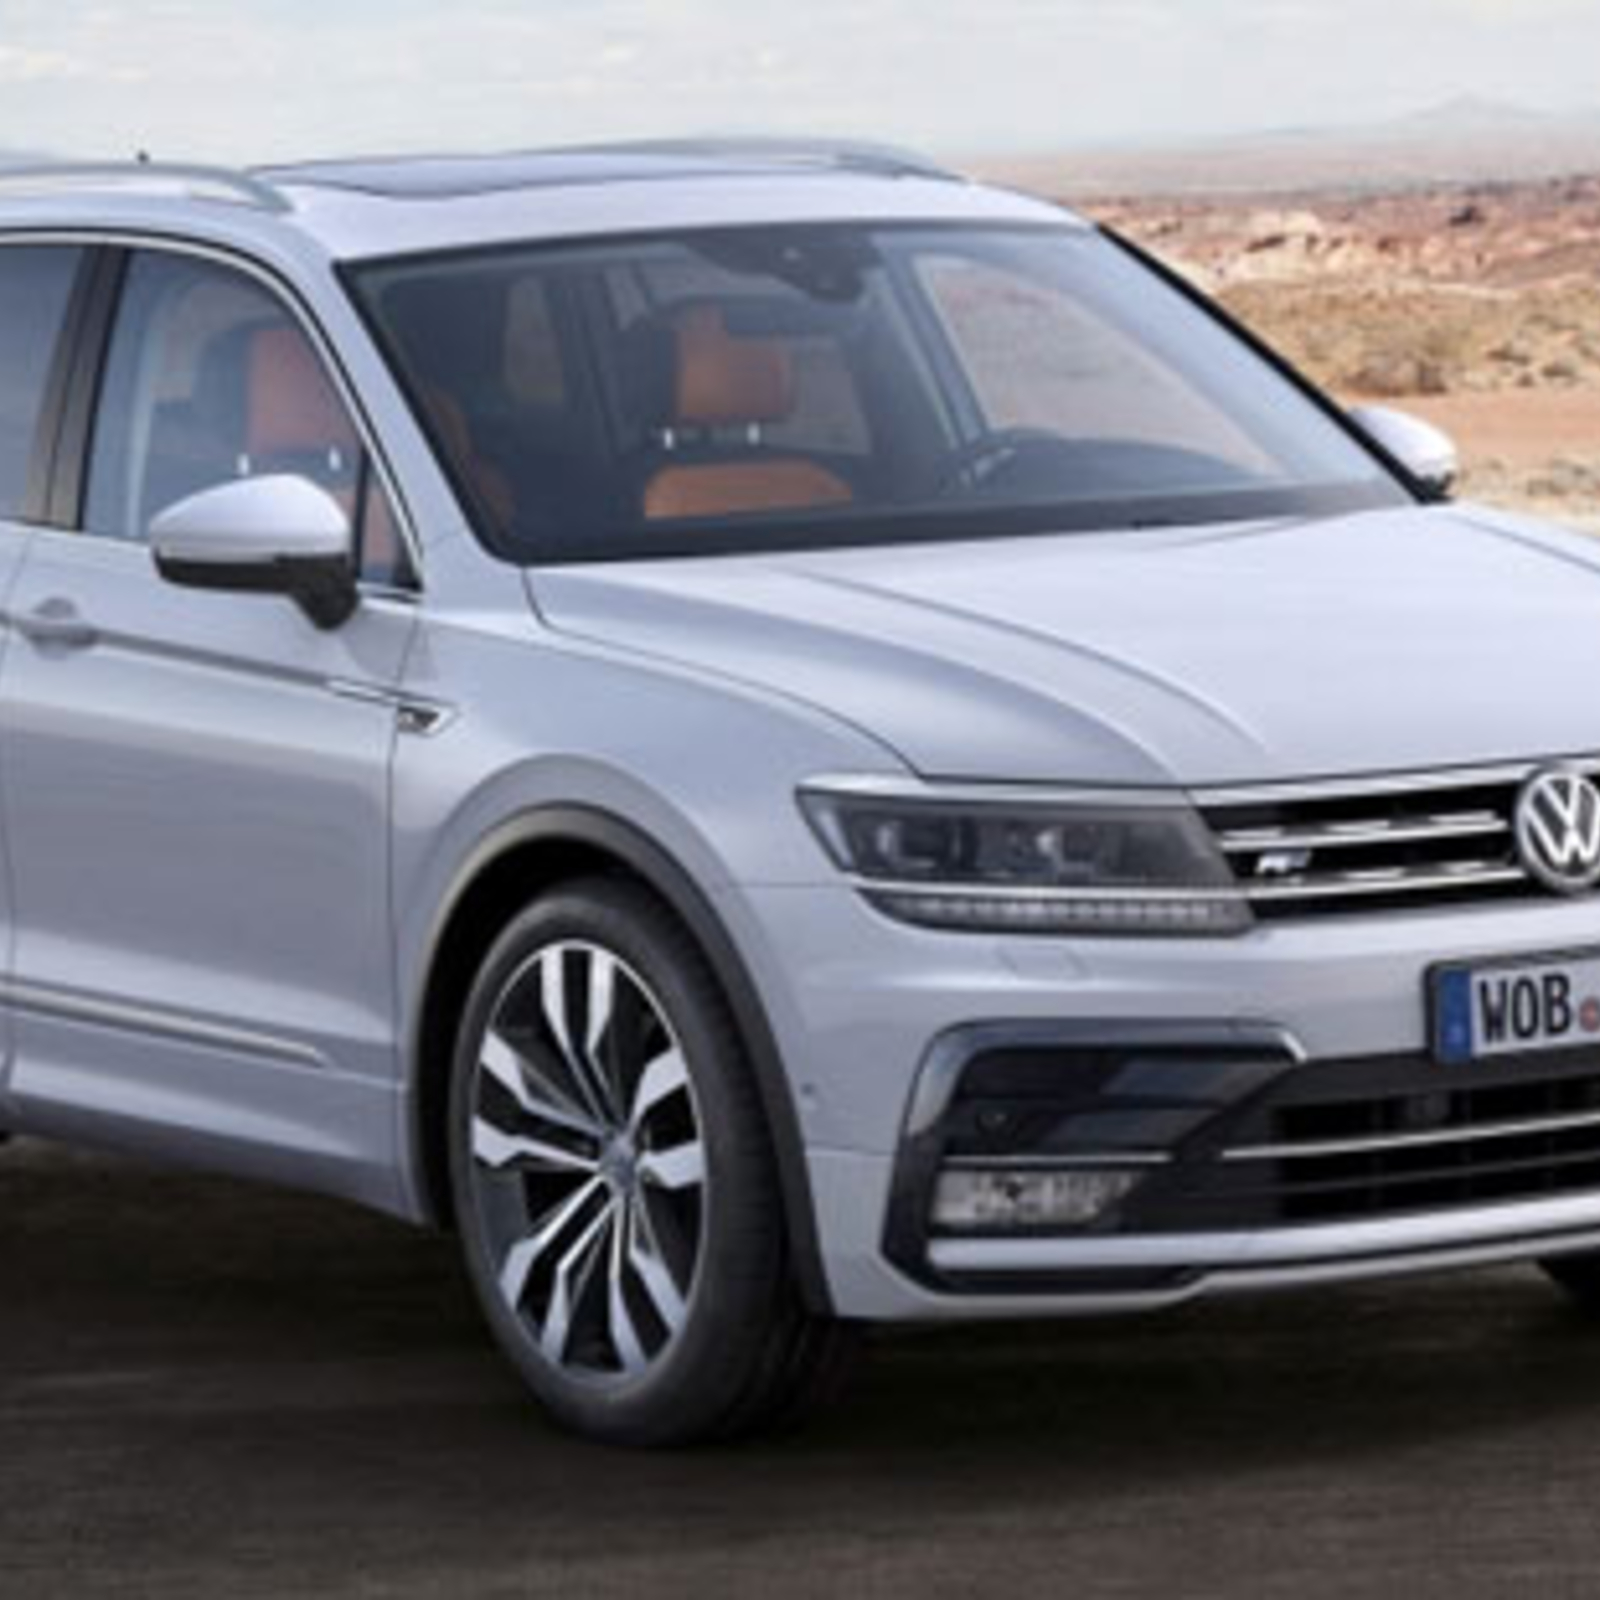 Neuer' VW Polo bestellbar - alle Preise der Facelift-Version - oe24.at